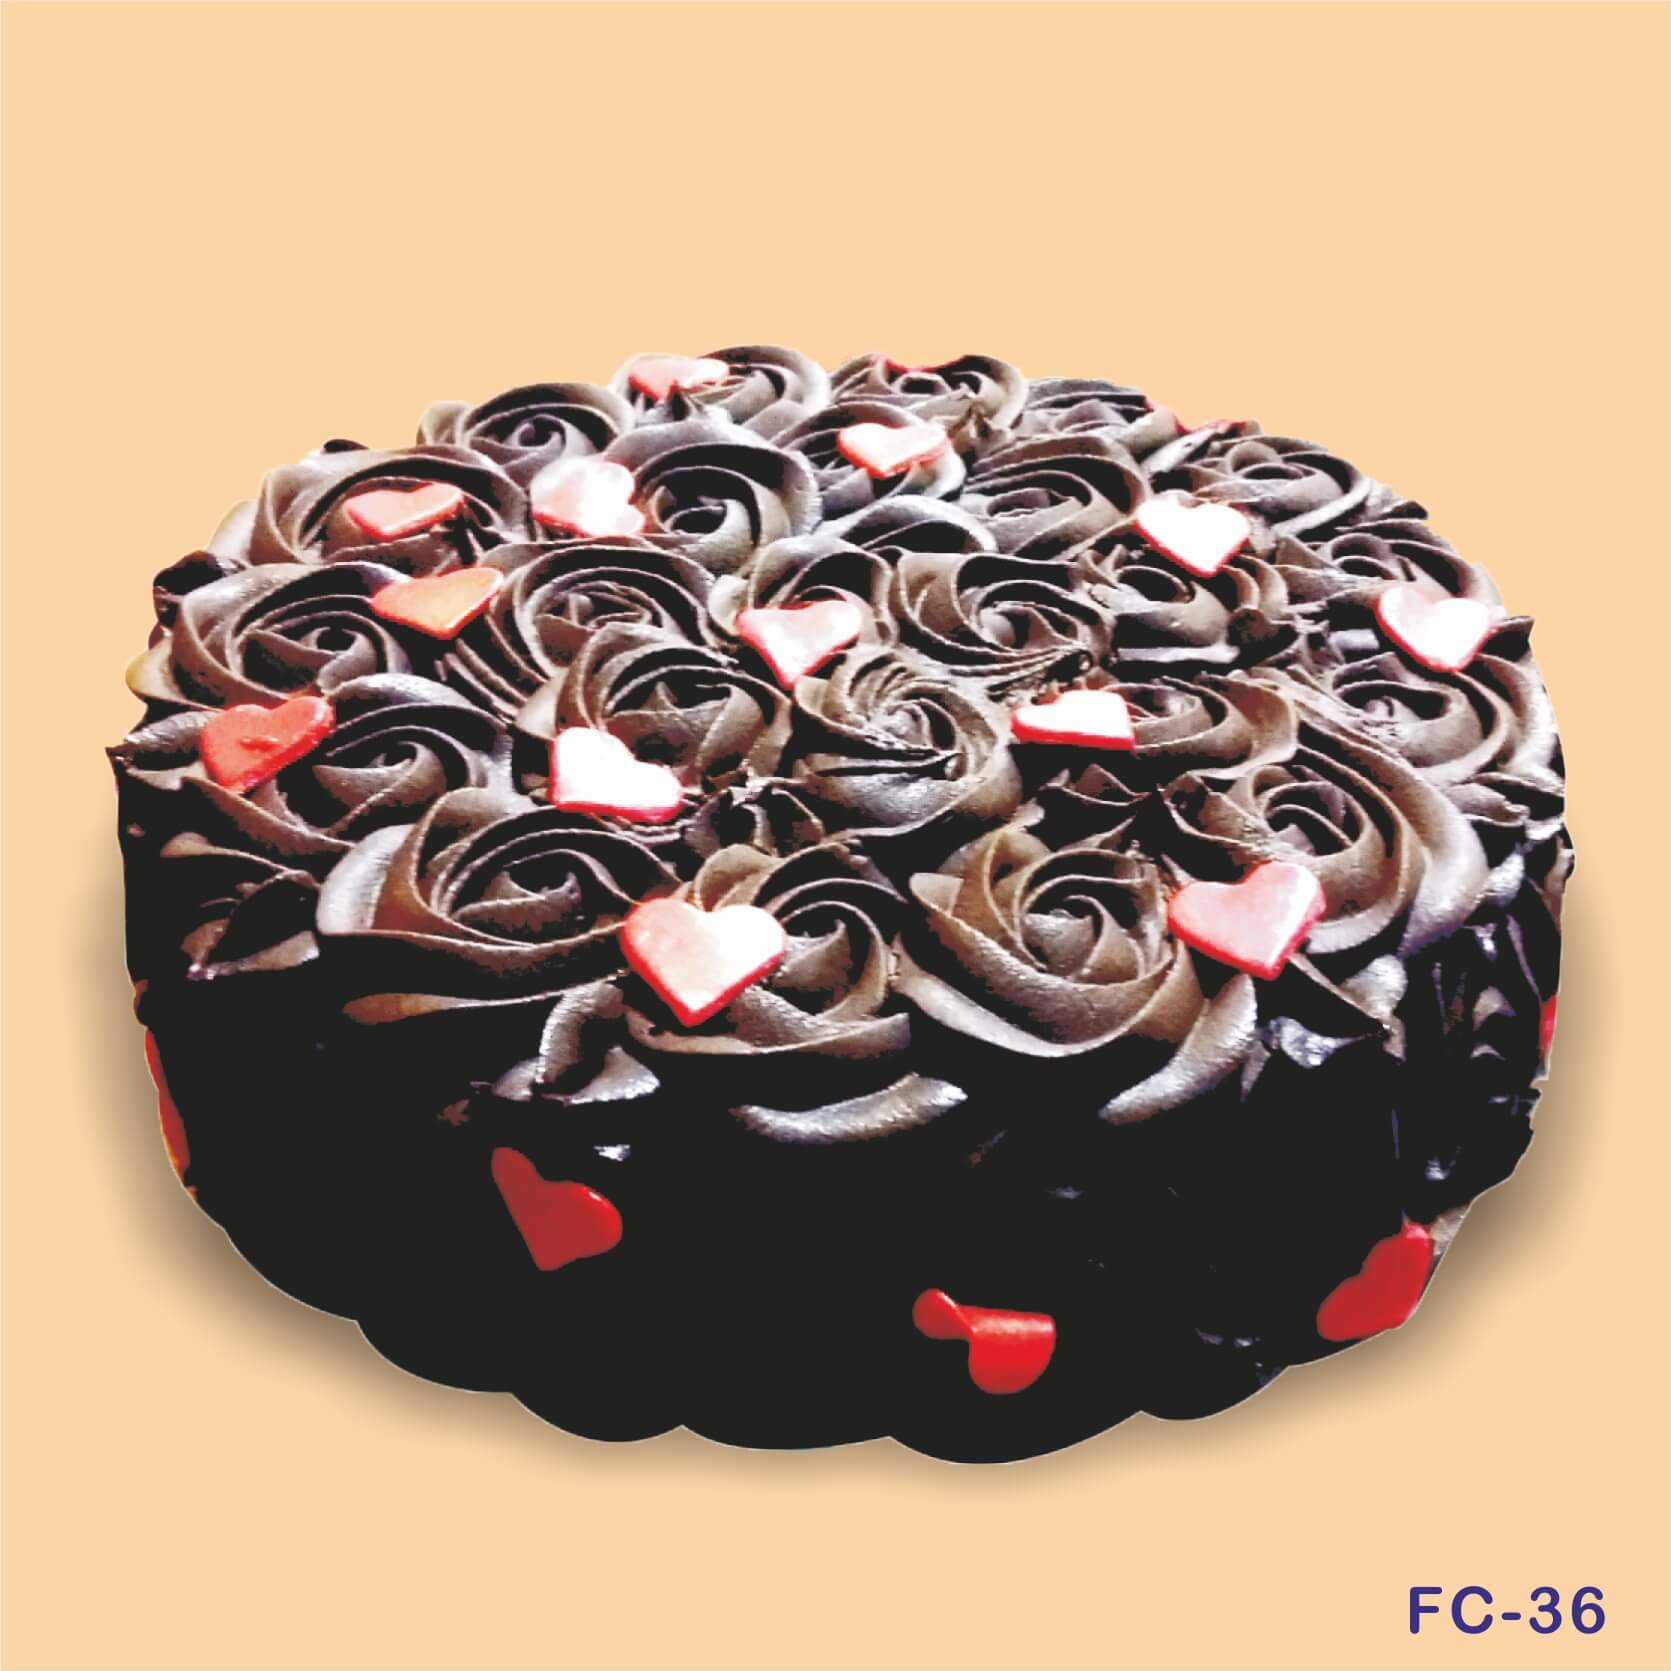 Heavenly Love Chocolate Delight Cake